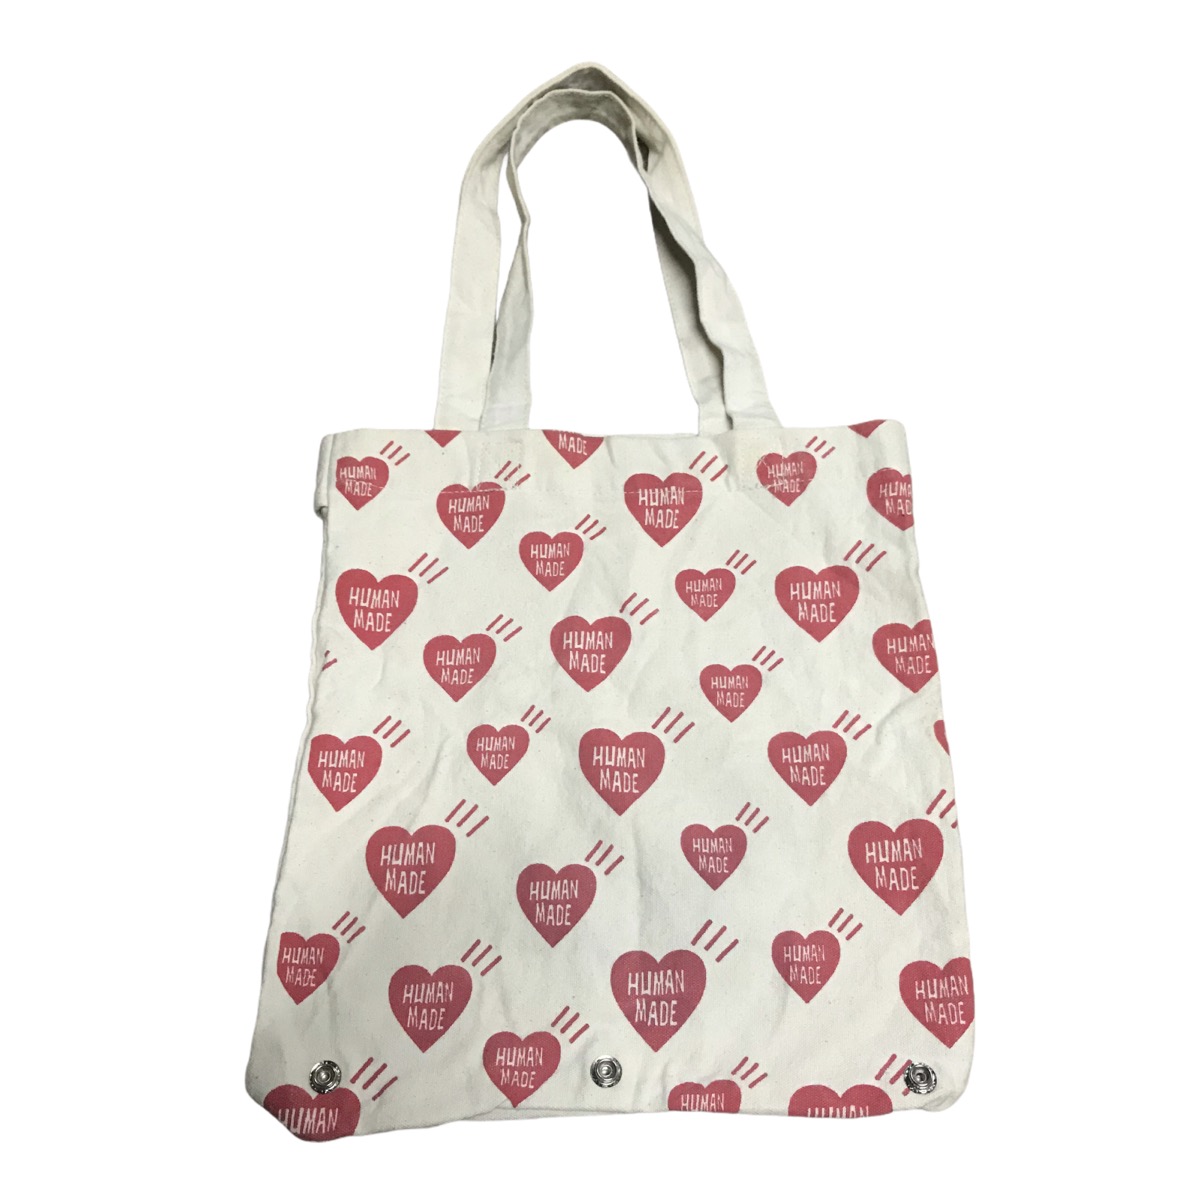 Human made heart logo tote bag - 2